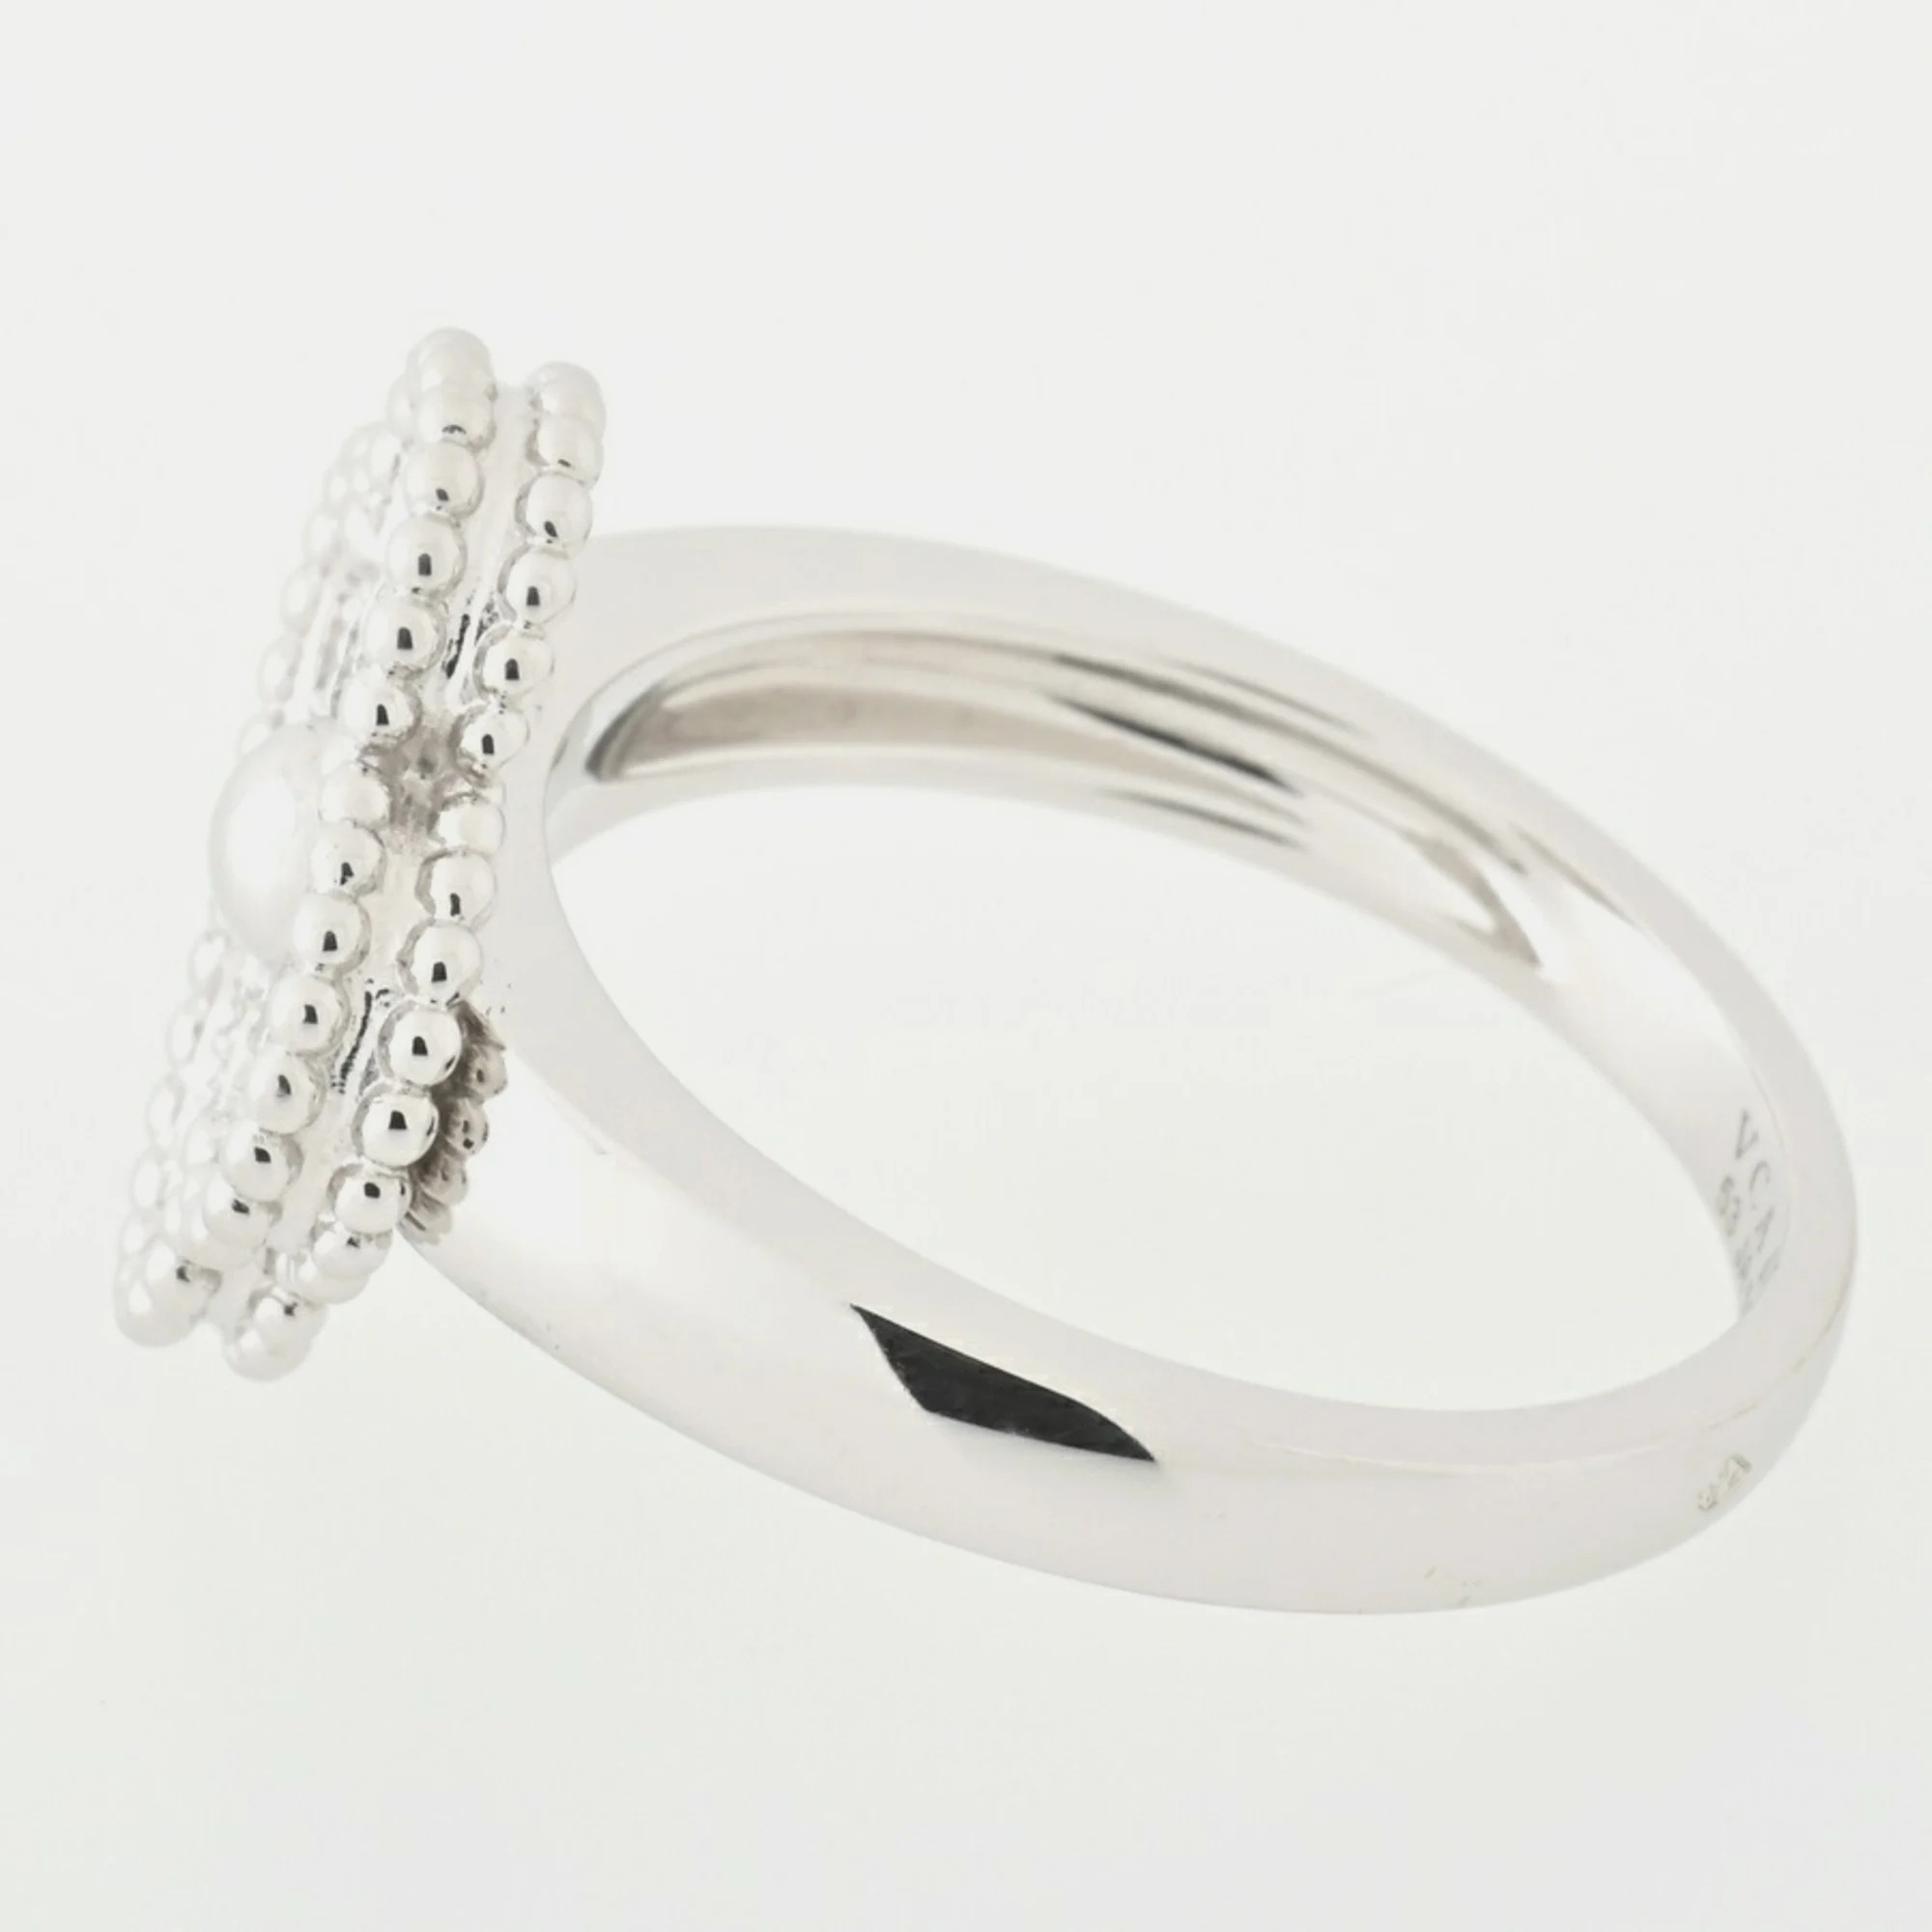 Van Cleef & Arpels Vintage Alhambra 18K White Gold Diamond Ring EU 53